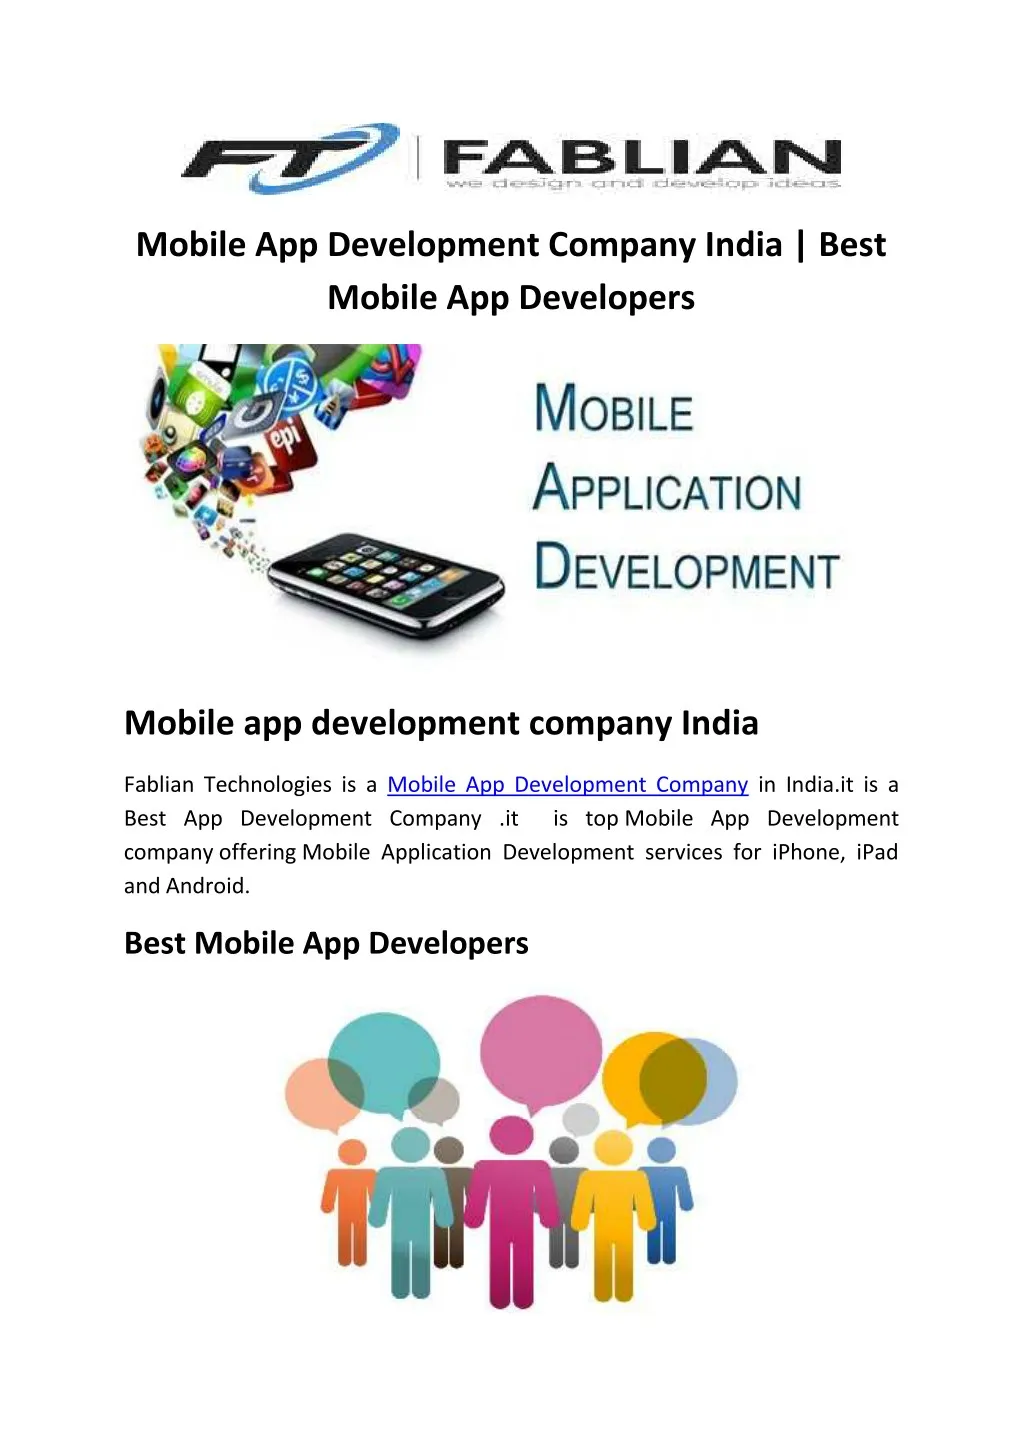 mobile app development company india best mobile